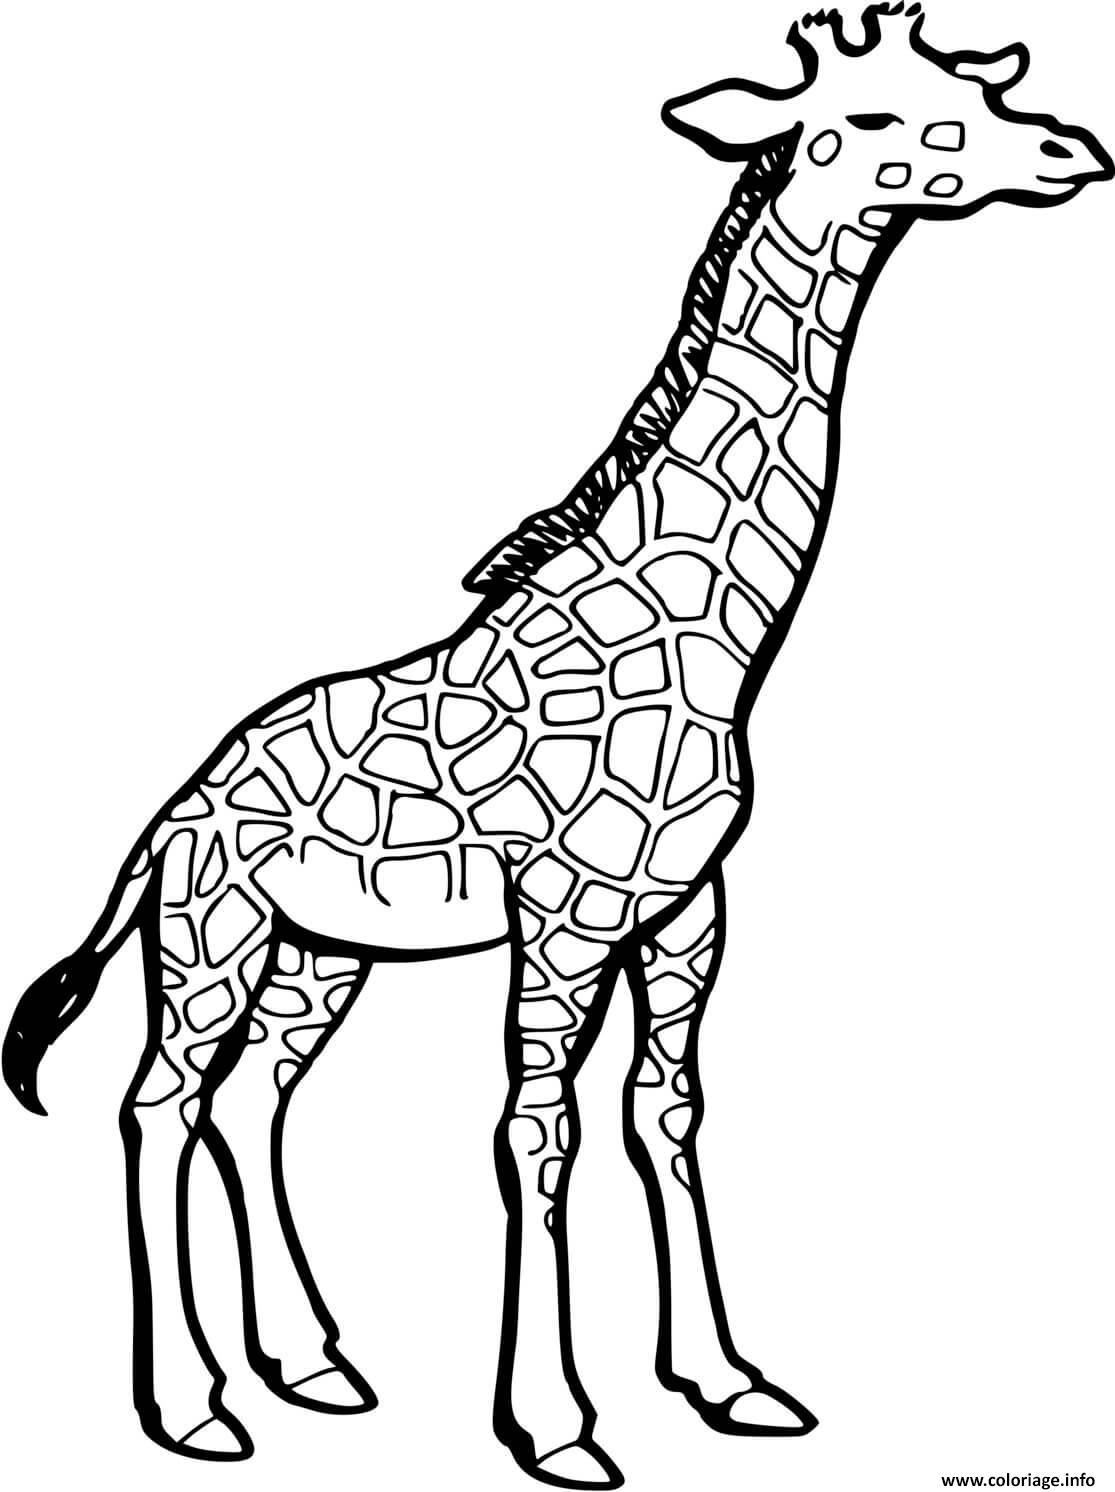 Coloriage Dessin D Une Girafe Dessin à Imprimer